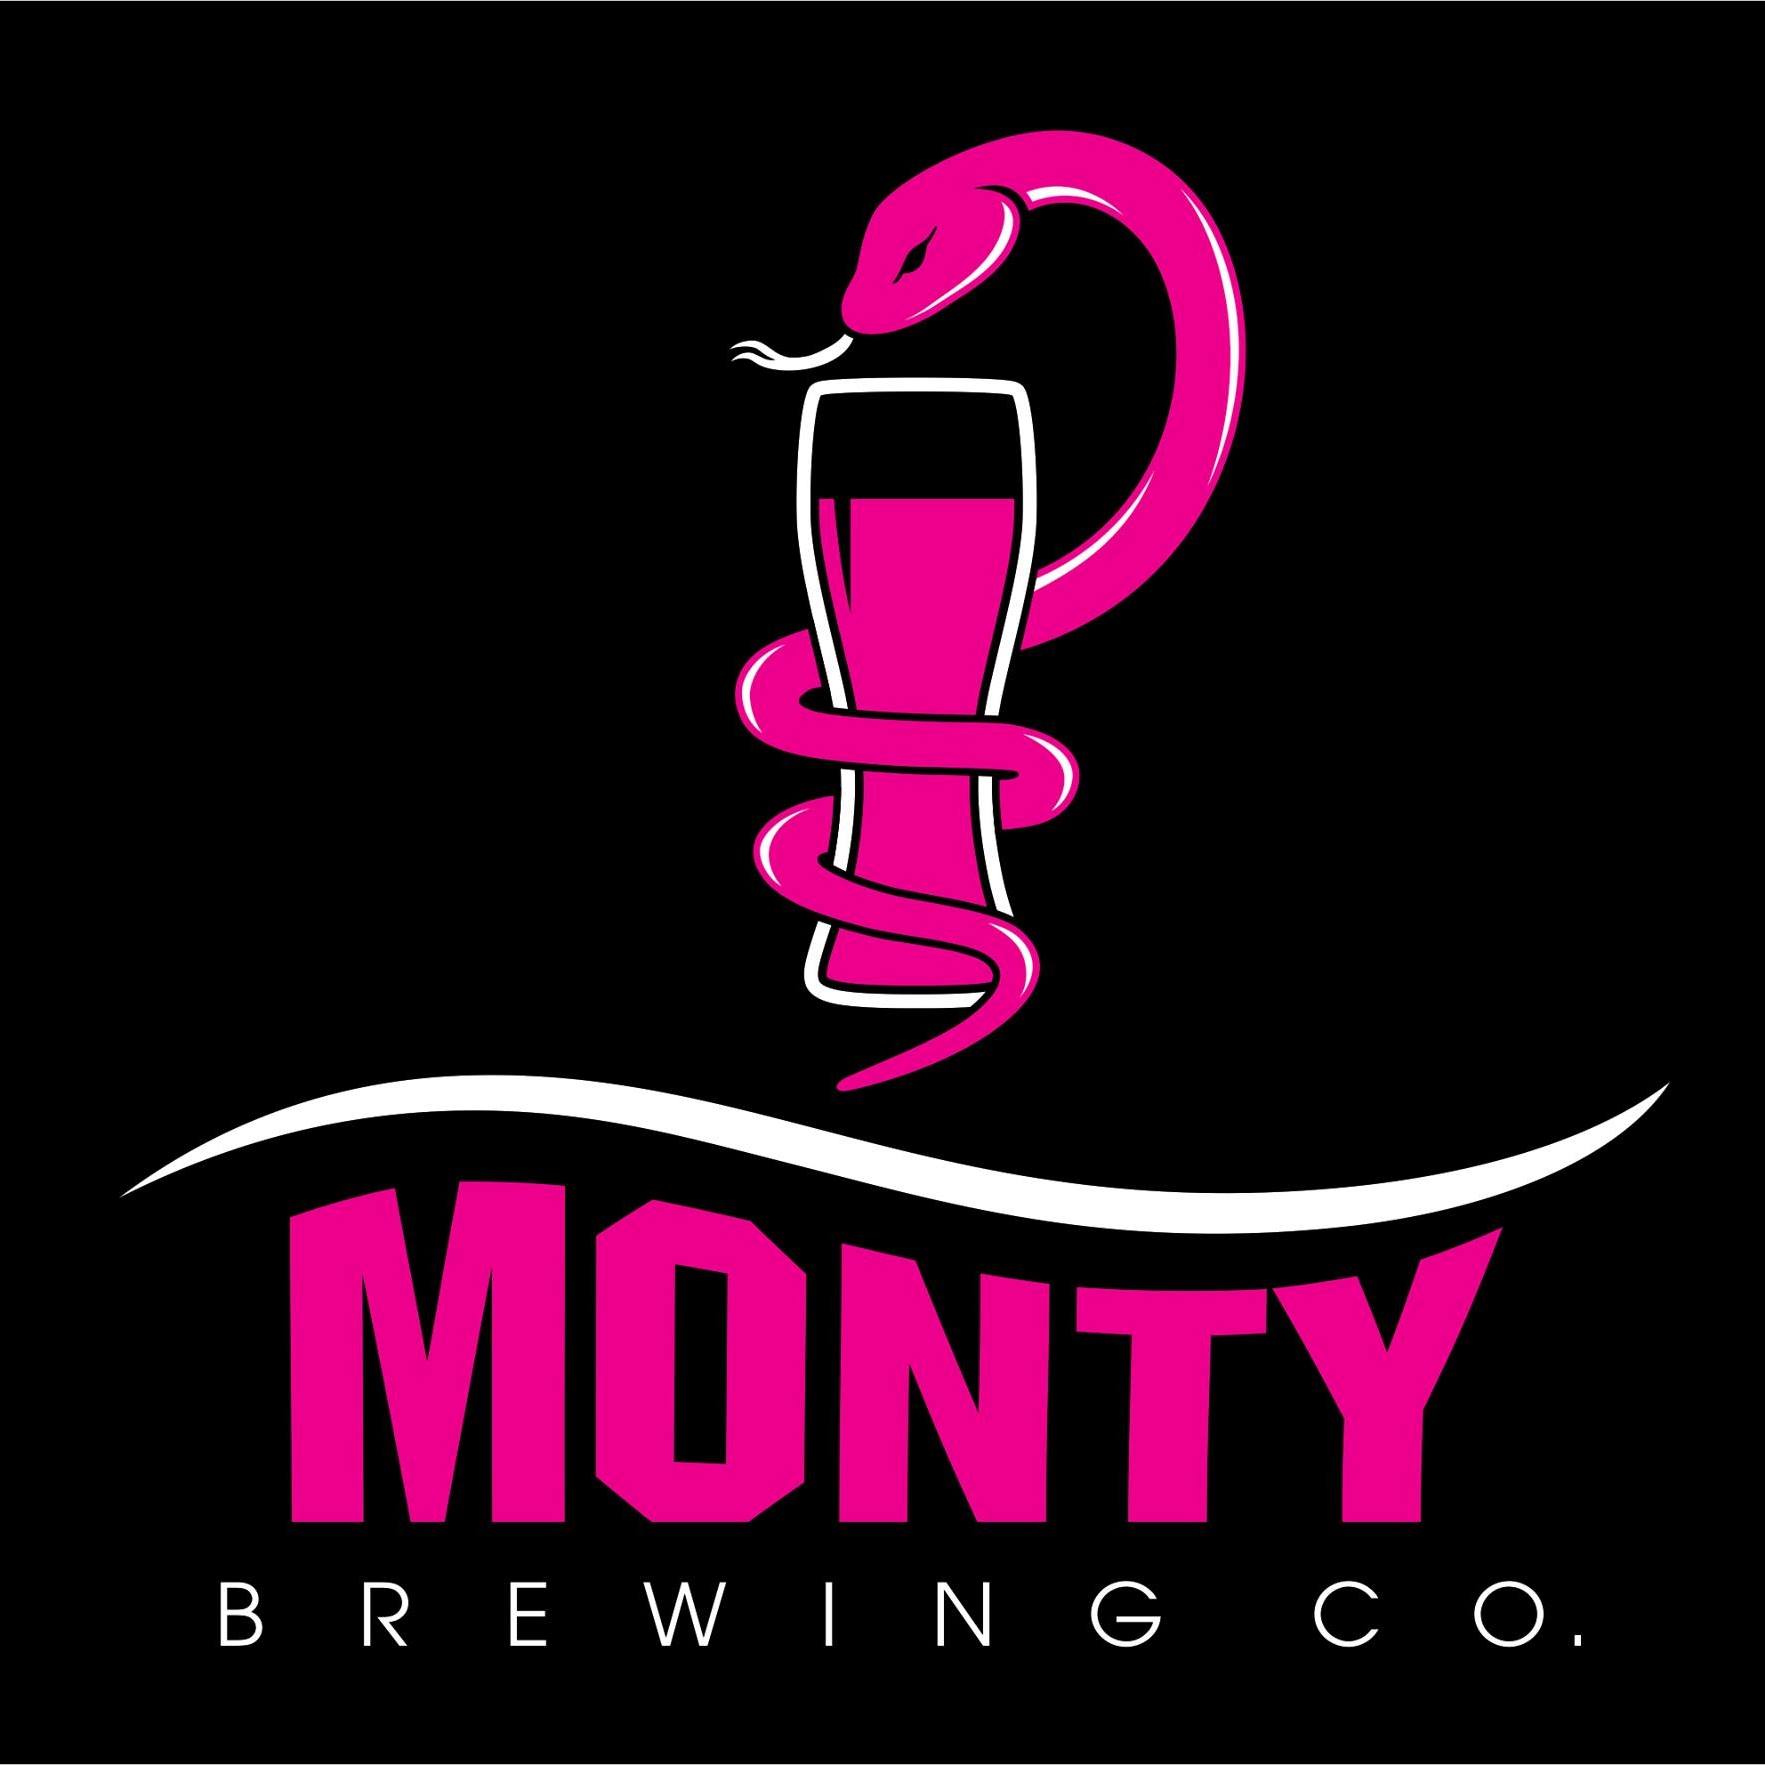 Monty Brewing Company